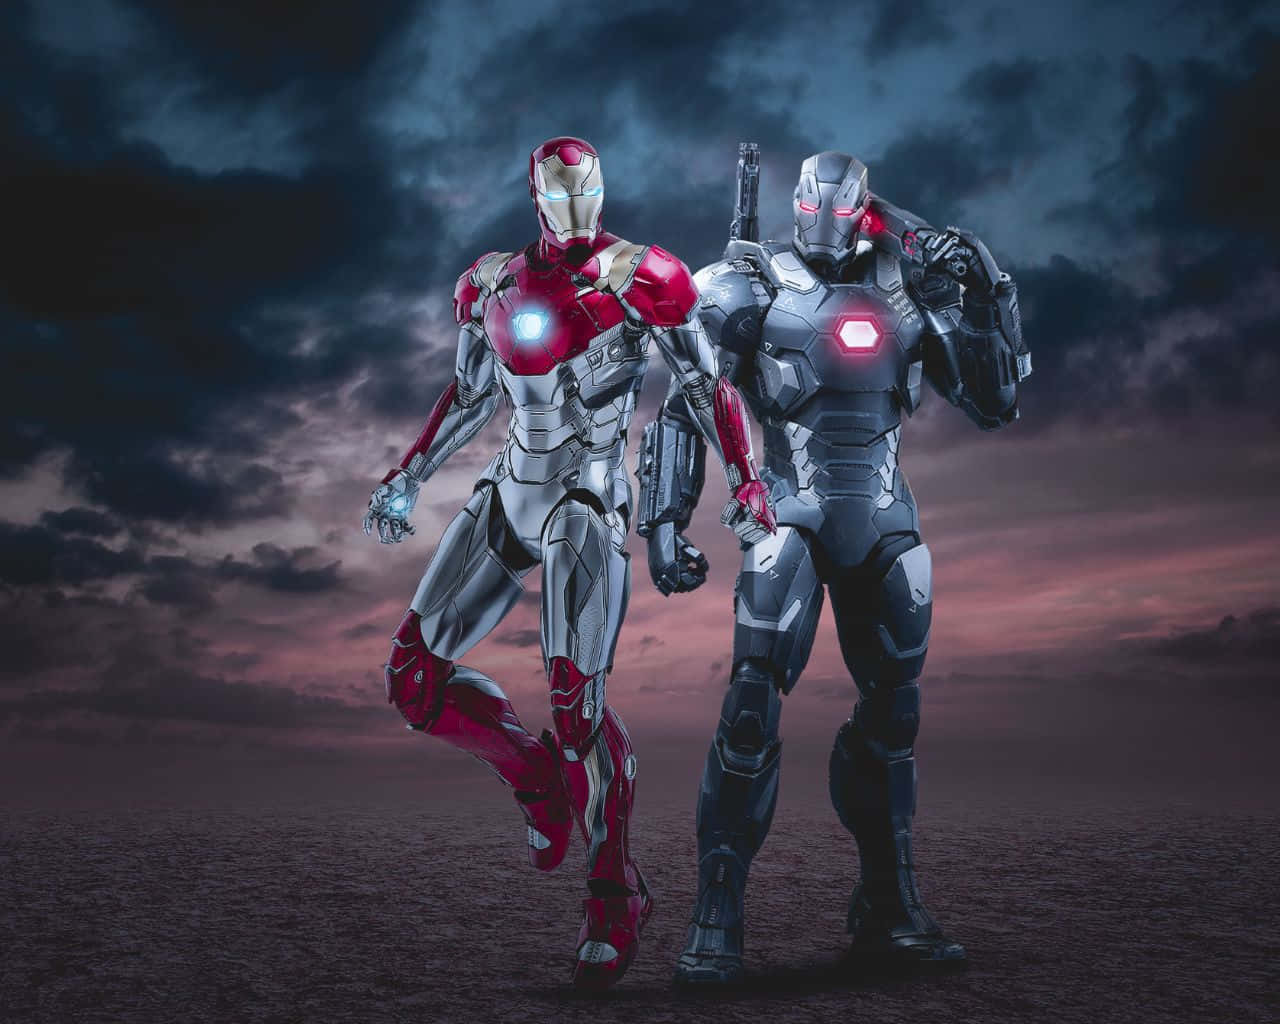 Iron Man takes on Iron Monger in an epic battle Wallpaper